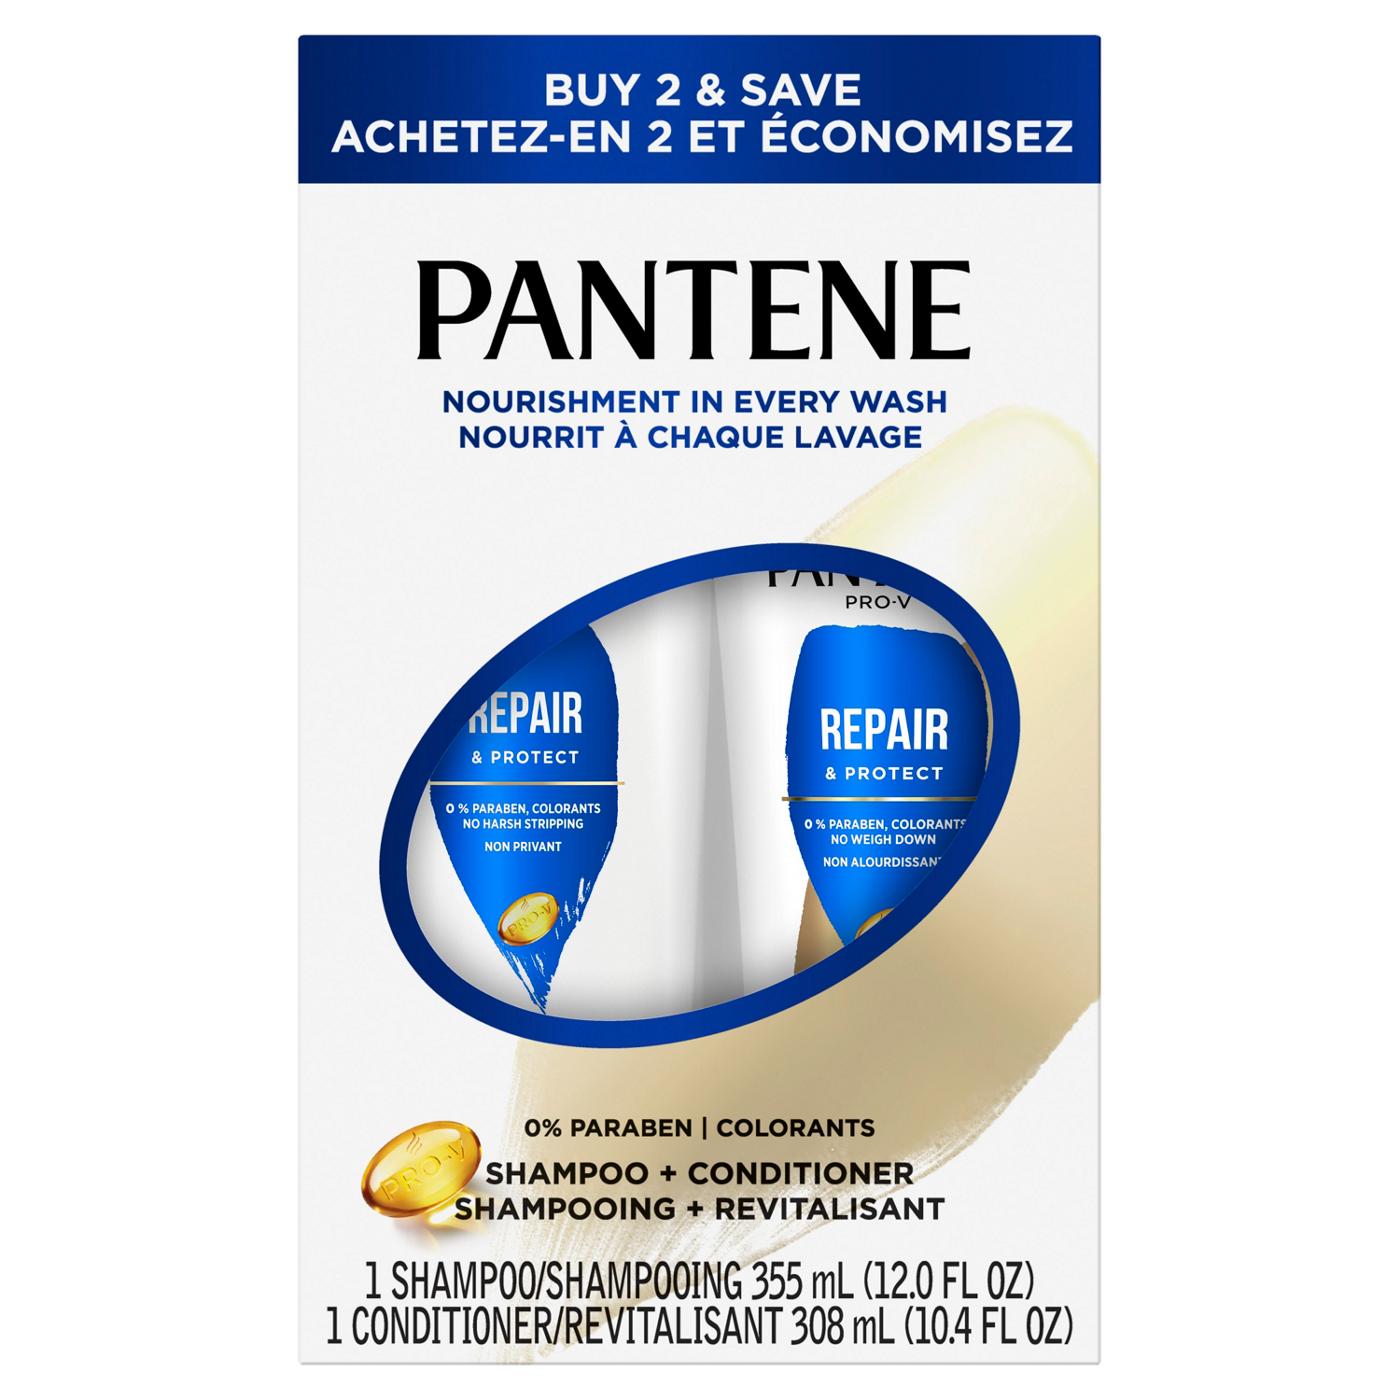 Pantene Pro-V Repair & Protect Shampoo + Conditioner; image 1 of 11